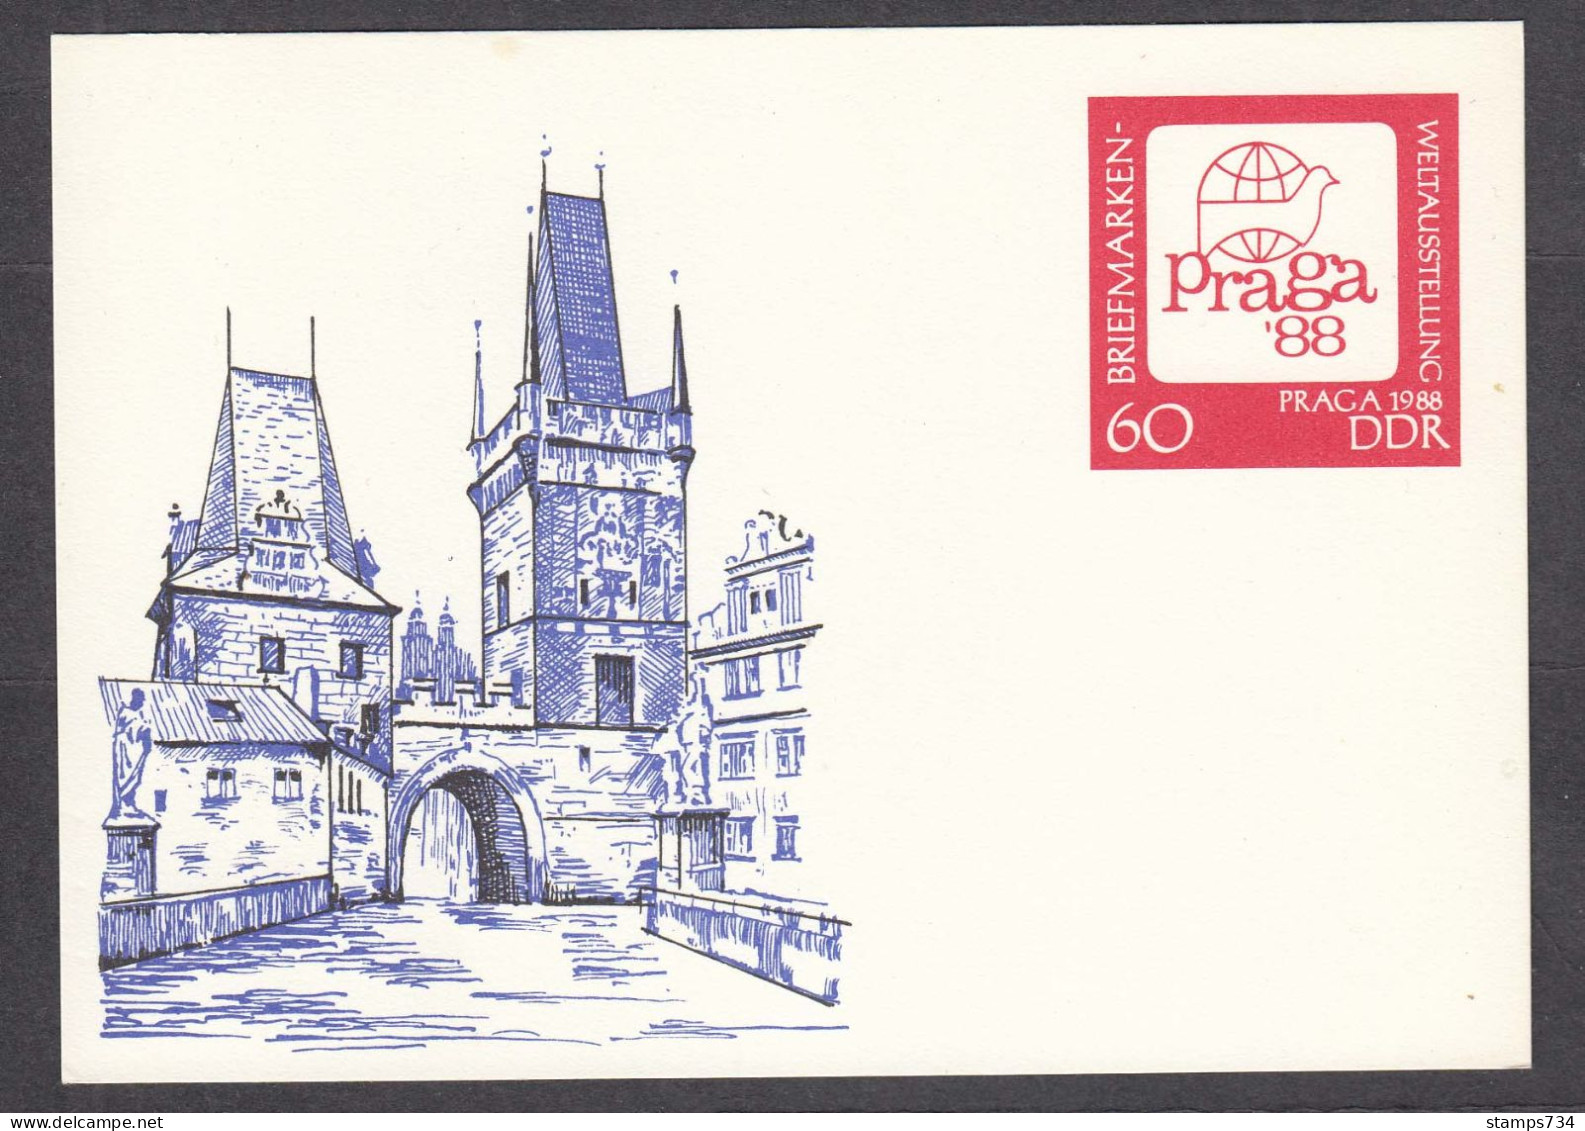 DDR 02/1988 - World Stamp Exhibion PRAGA'88, Post. Stationery (card), Mint - Cartes Postales - Neuves